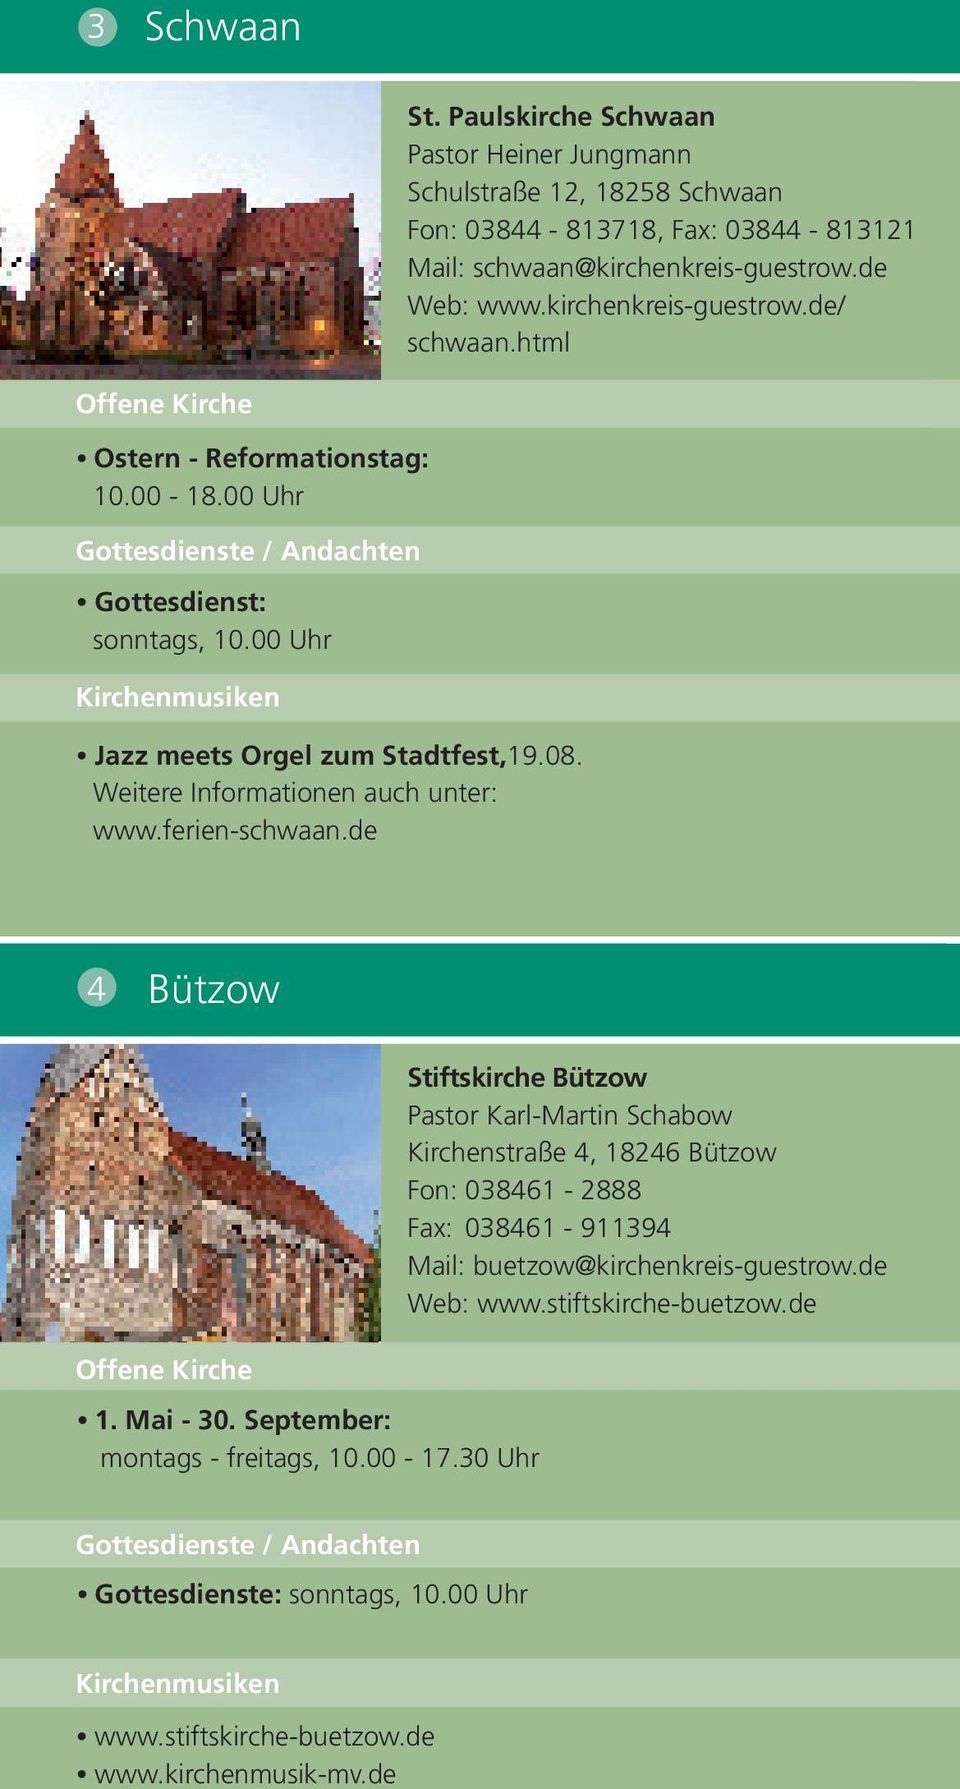 Weitere Informationen auch unter: www.ferien-schwaan.de 4 Bützow 1. Mai - 30. September: montags - freitags, 10.00-17.